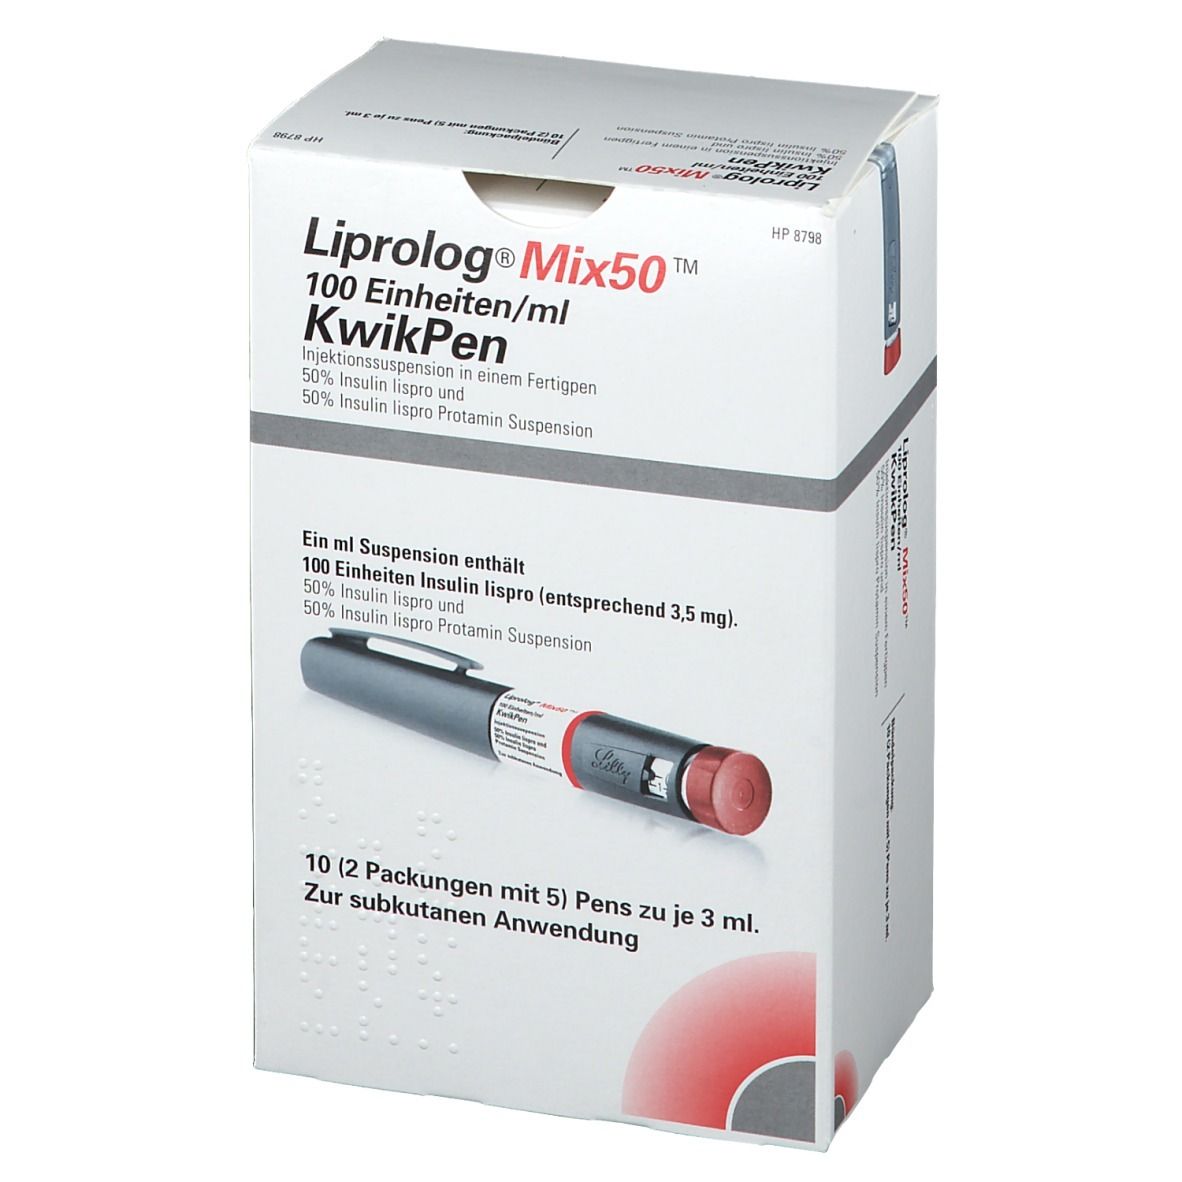 Liprolog® Mix50™ 100 Einheiten/ml KwikPen